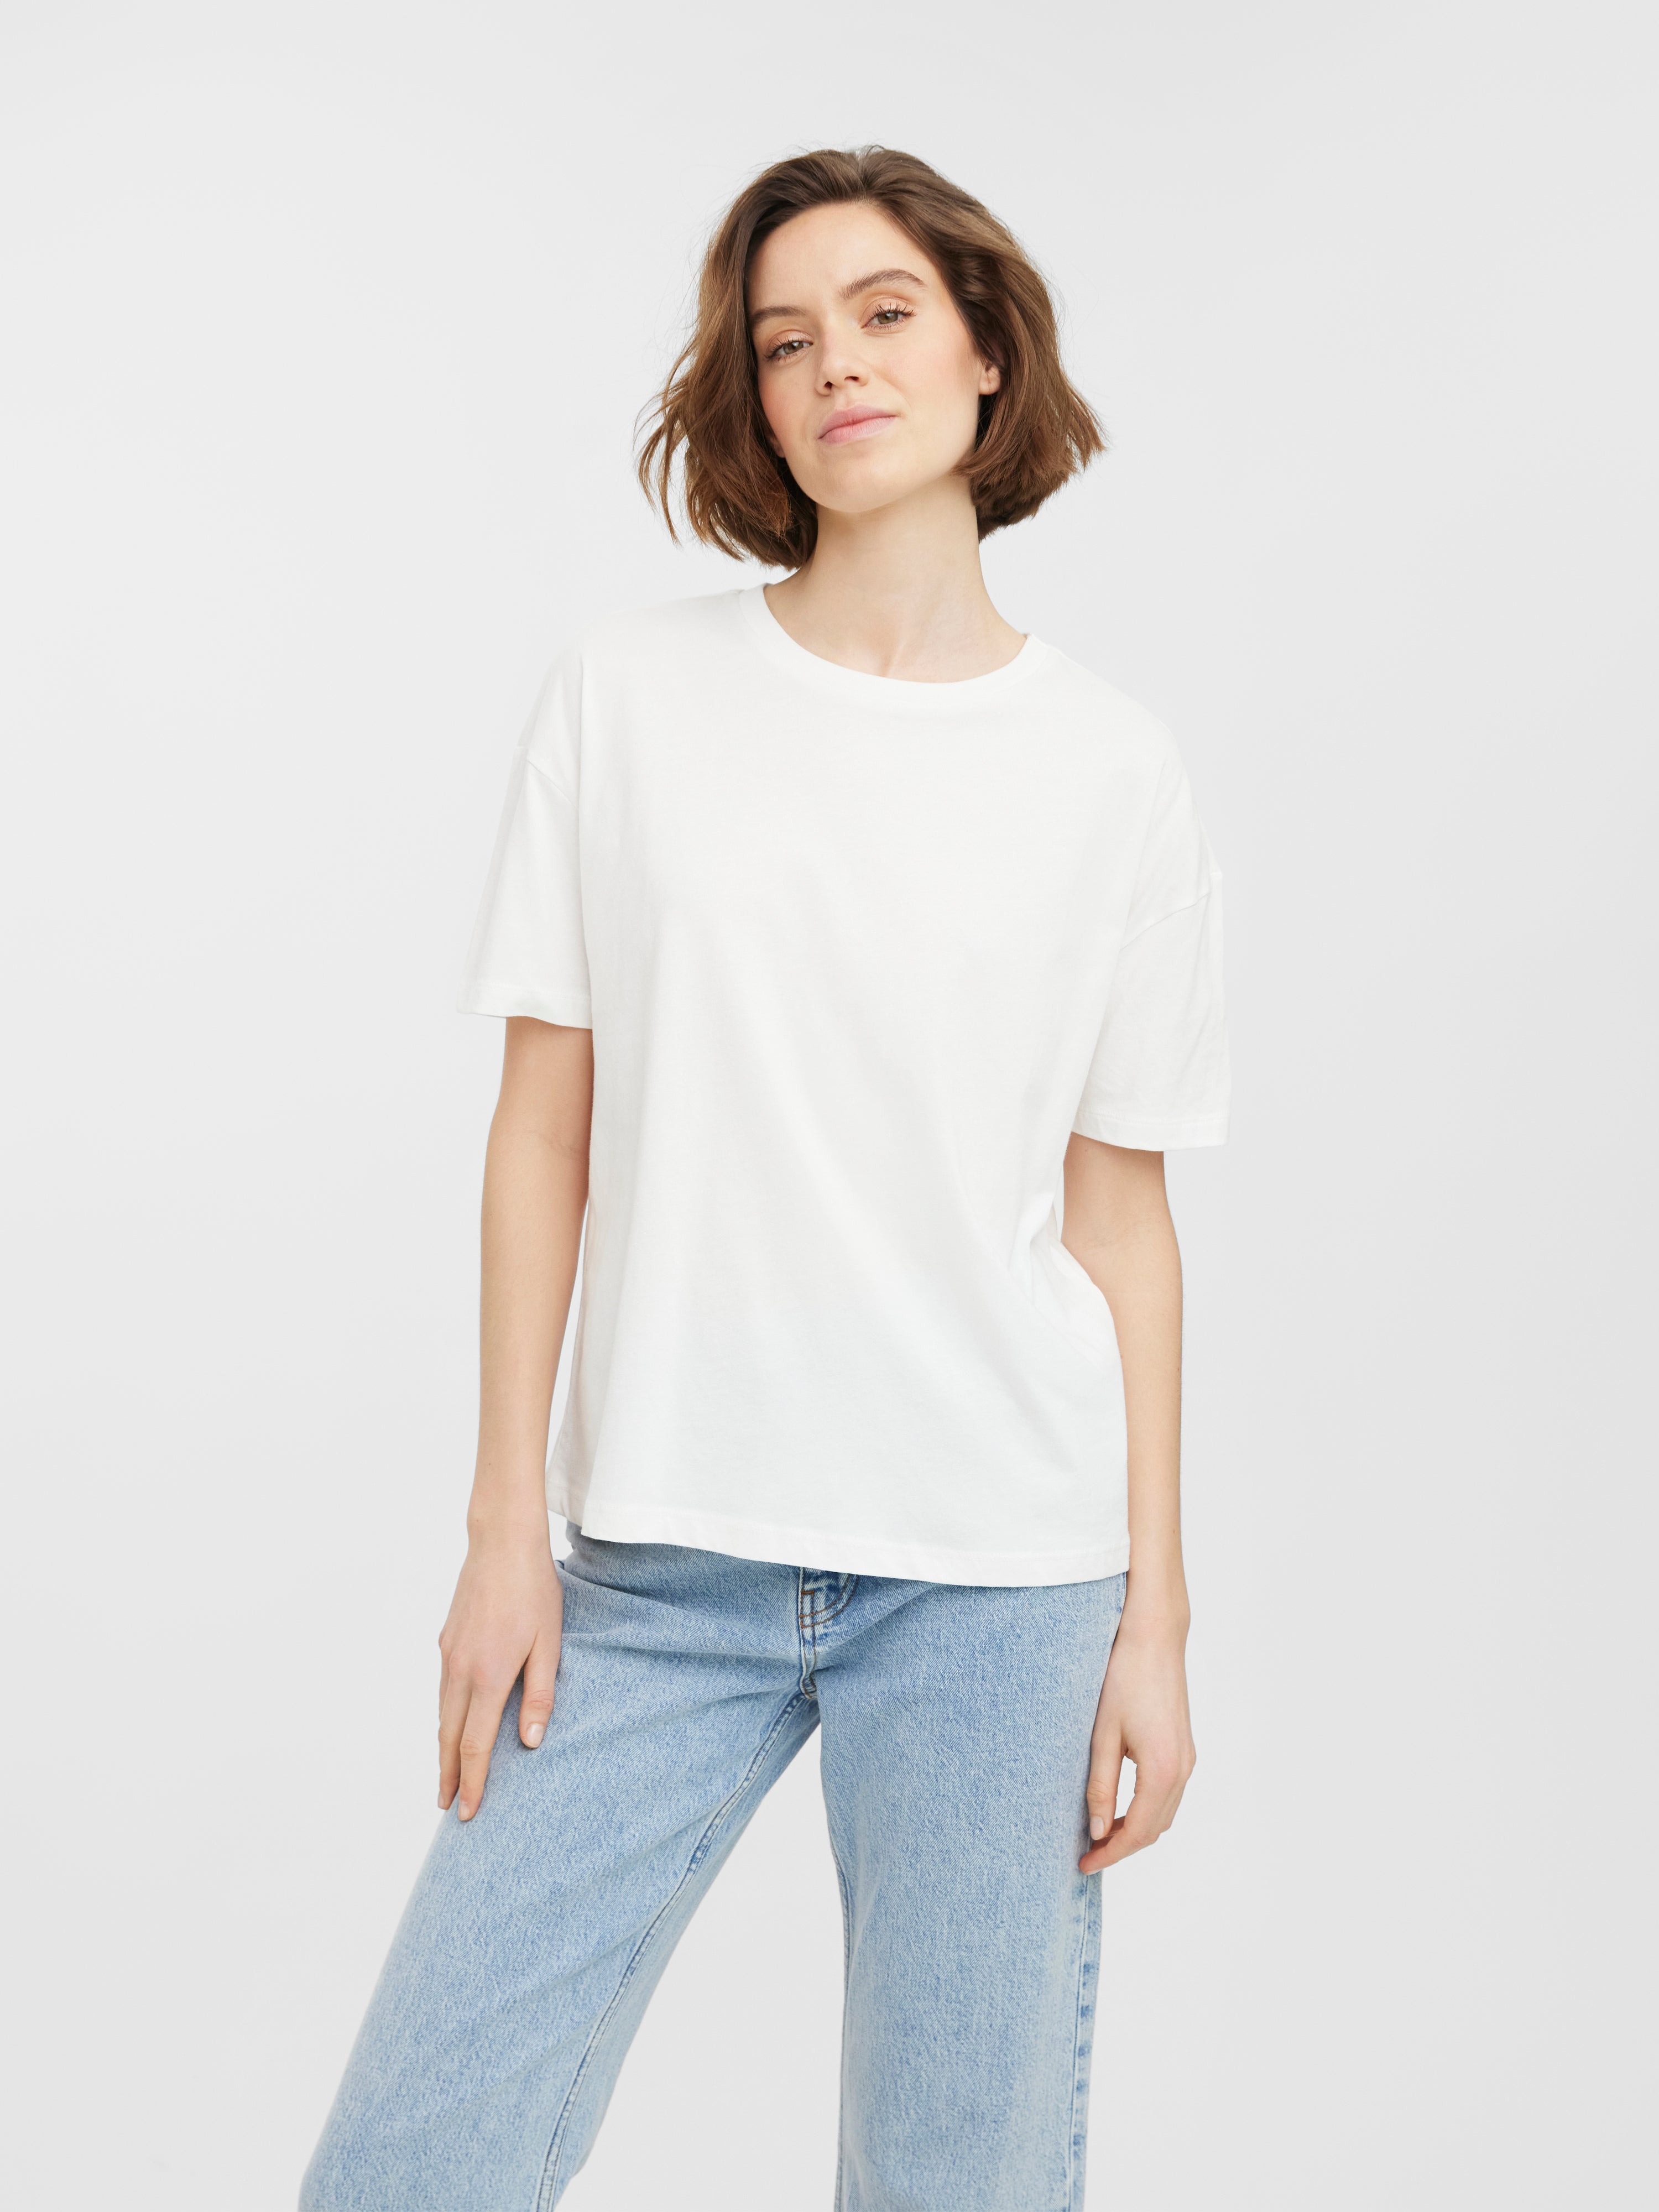 DAMEN Hemden & T-Shirts Falten Vero Moda Bluse Weiß L Rabatt 57 % 